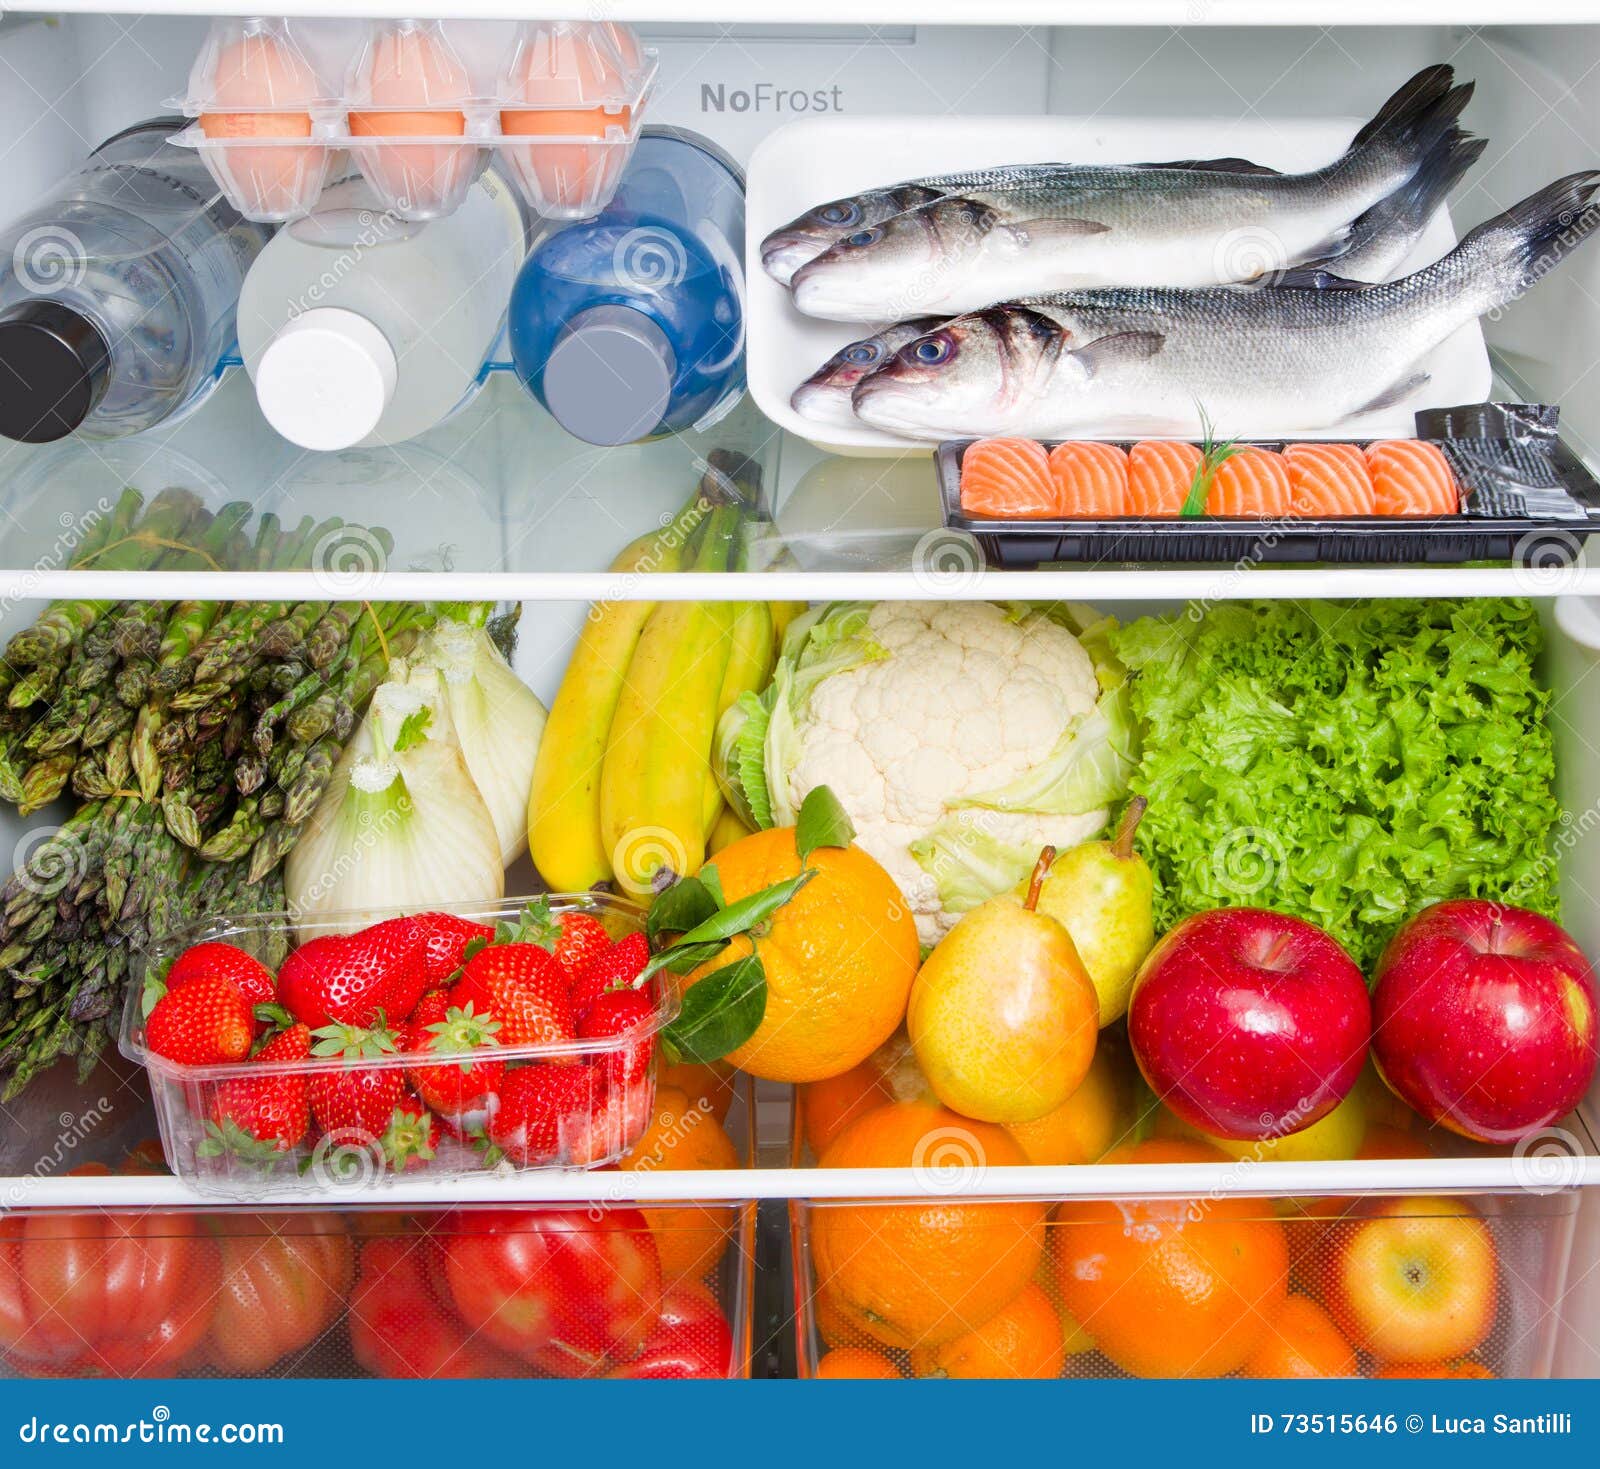 a refrigerator full of healthy food, mediterranean diet